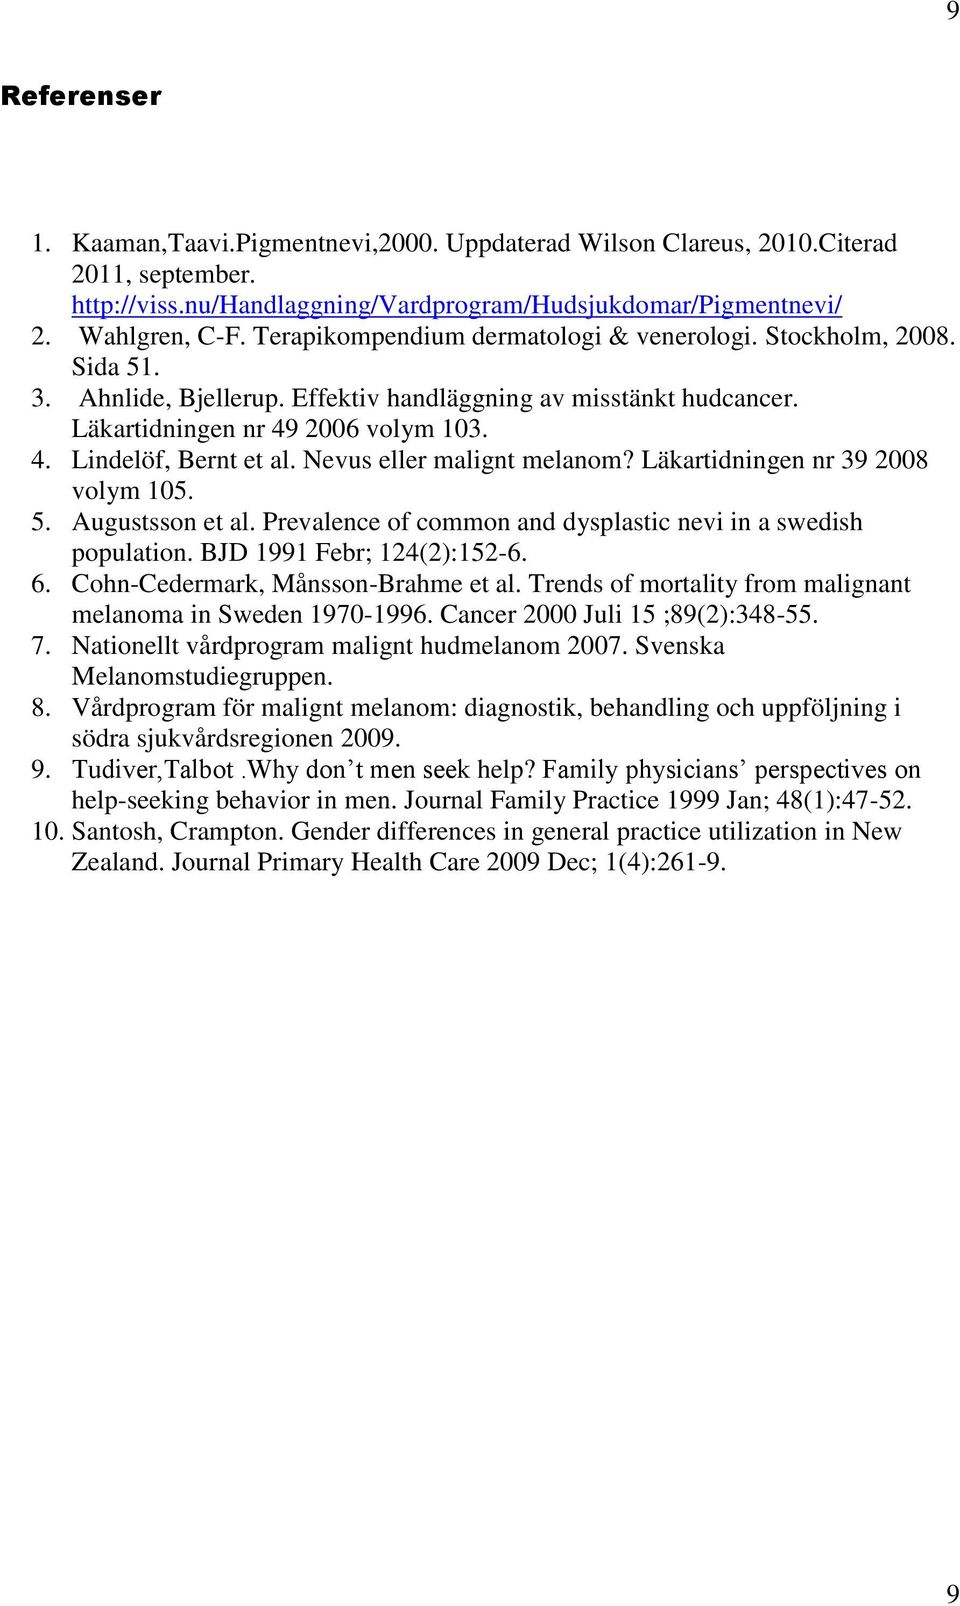 Nevus eller malignt melanom? Läkartidningen nr 39 2008 volym 105. 5. Augustsson et al. Prevalence of common and dysplastic nevi in a swedish population. BJD 1991 Febr; 124(2):152-6. 6.